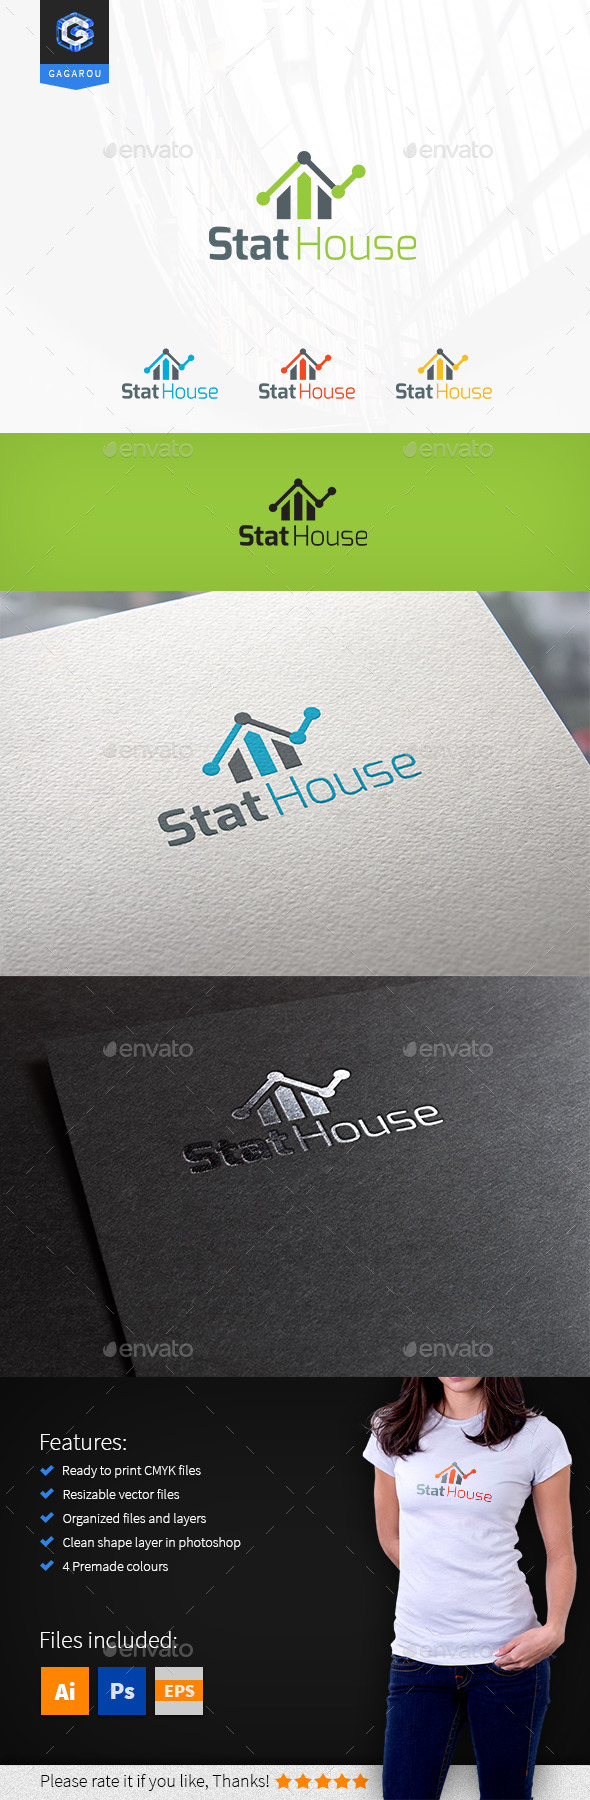 Stat House